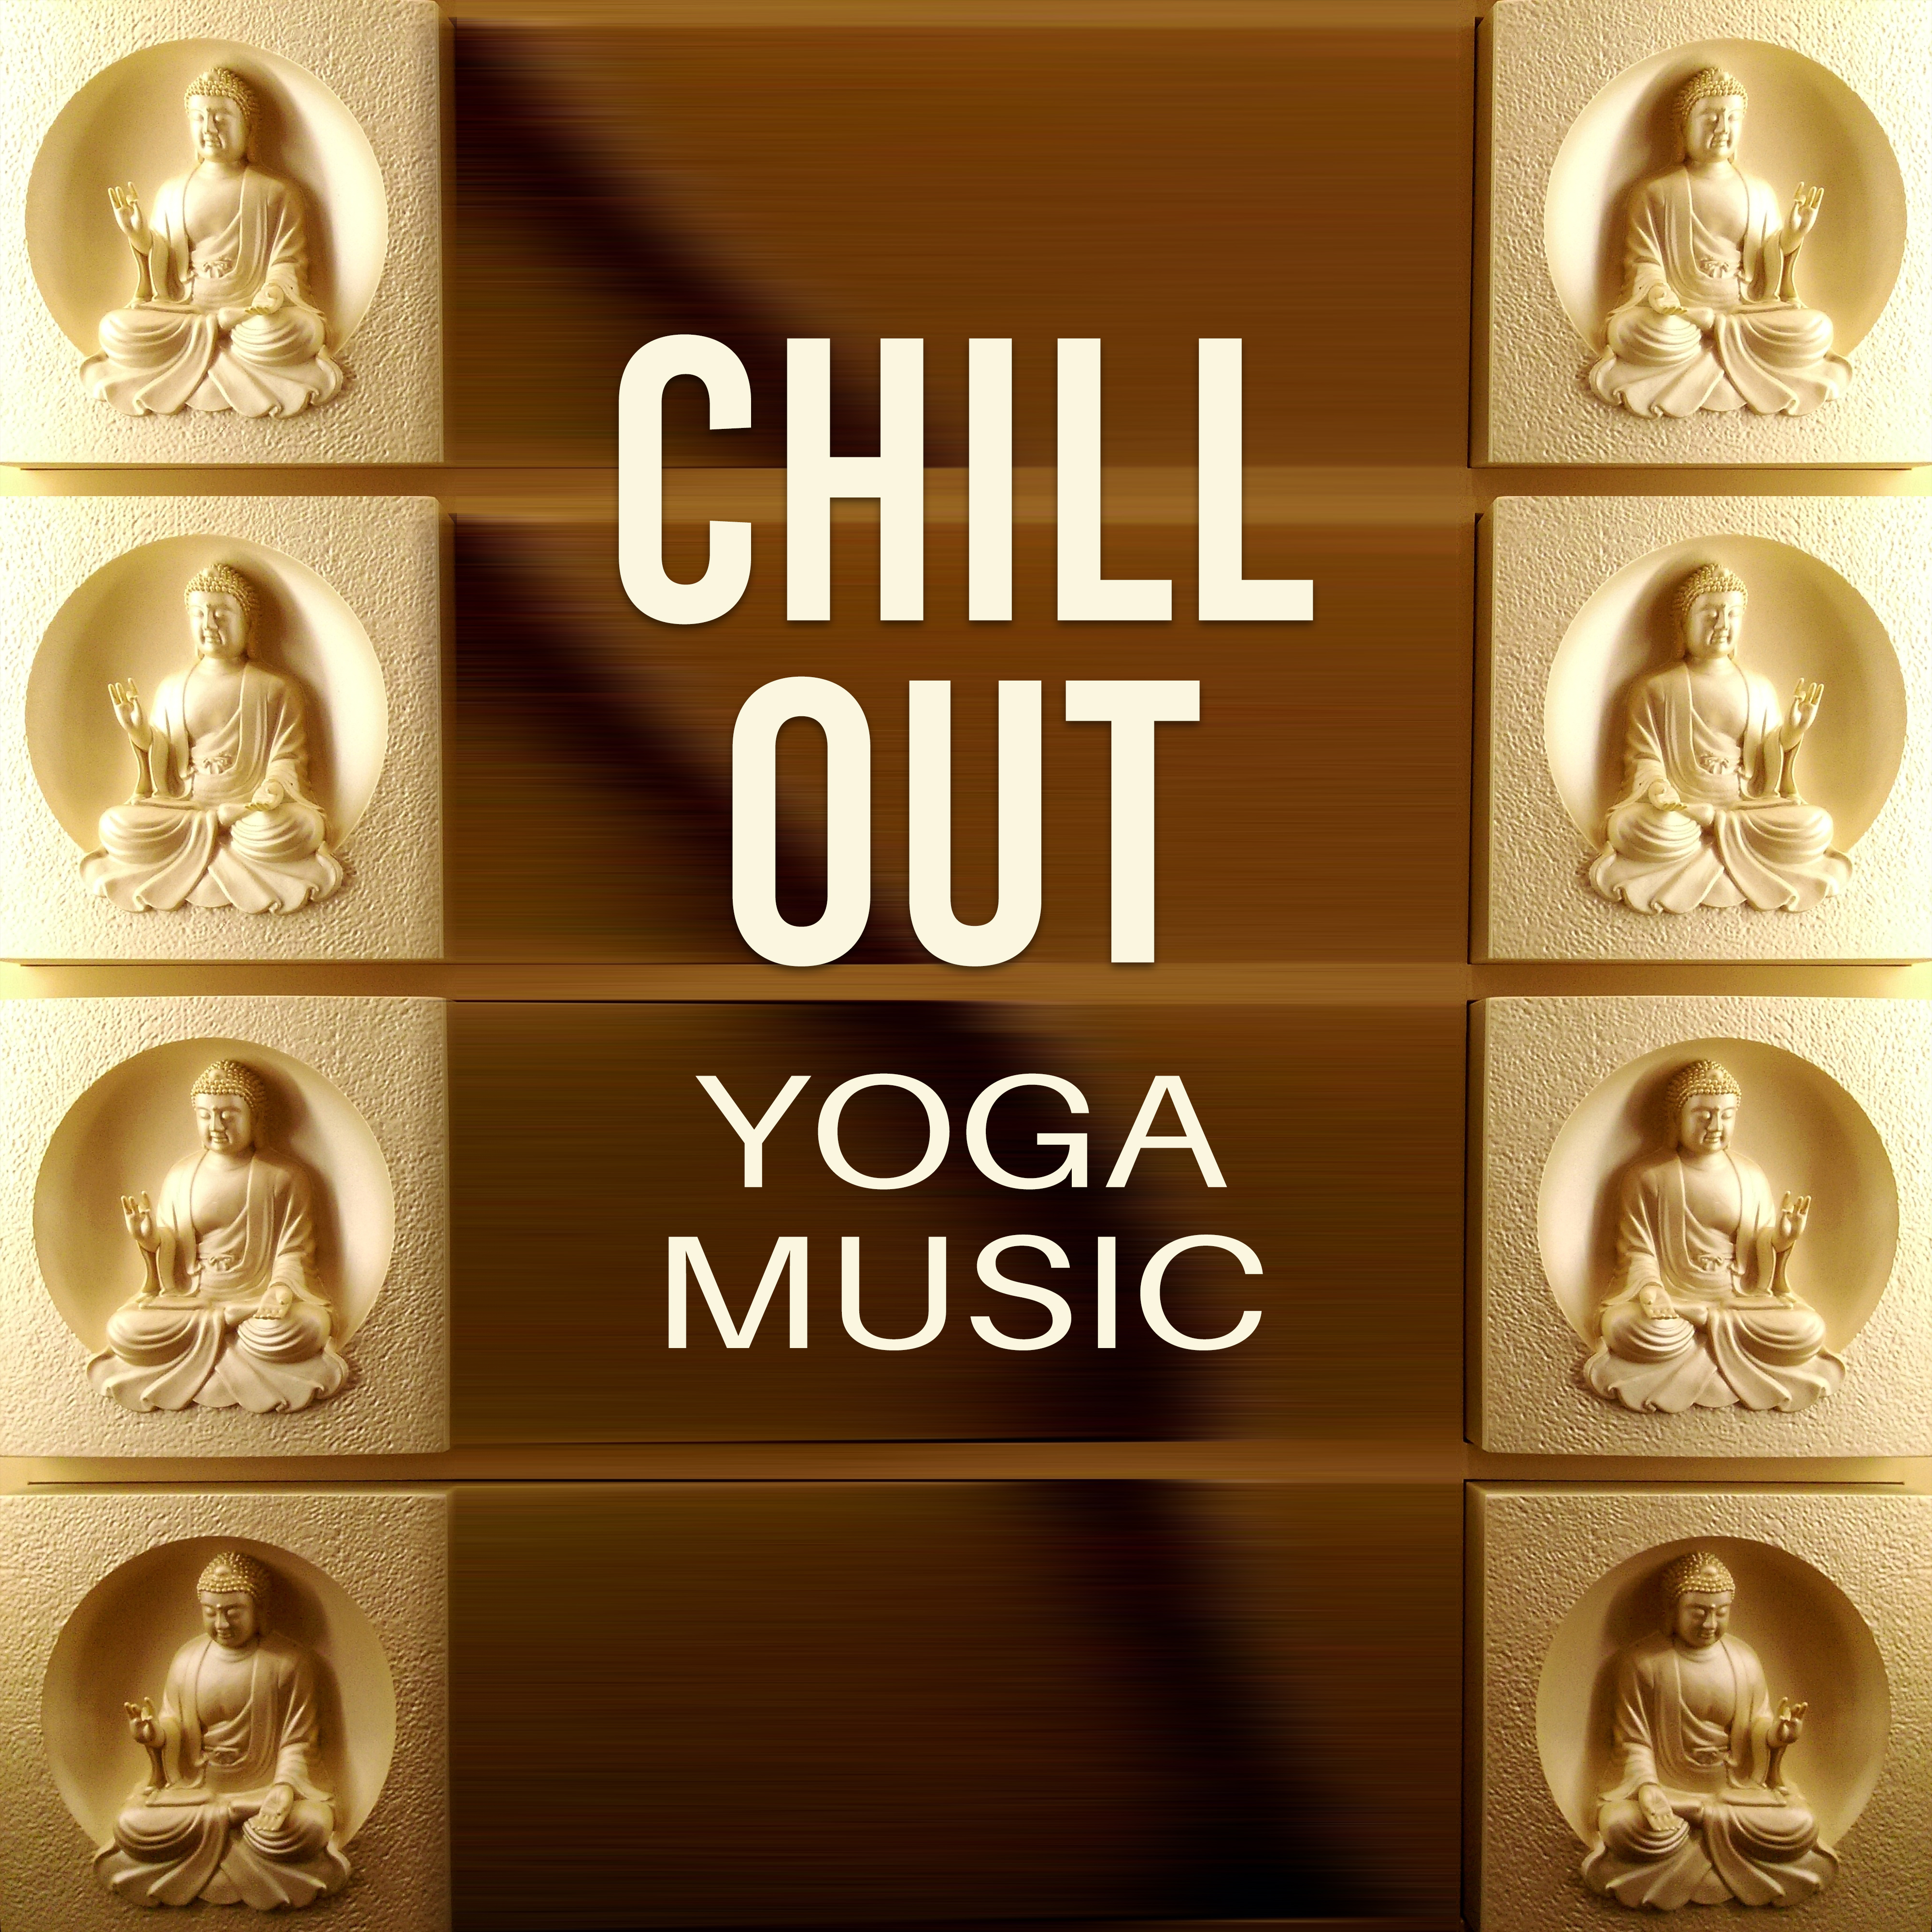 Chill Out Yoga Music – Oriental Music for Deep Meditation, Chill Out 2017, Chakra Balancing, Training Yoga, Tibetan Chill Out, Buddha Lounge